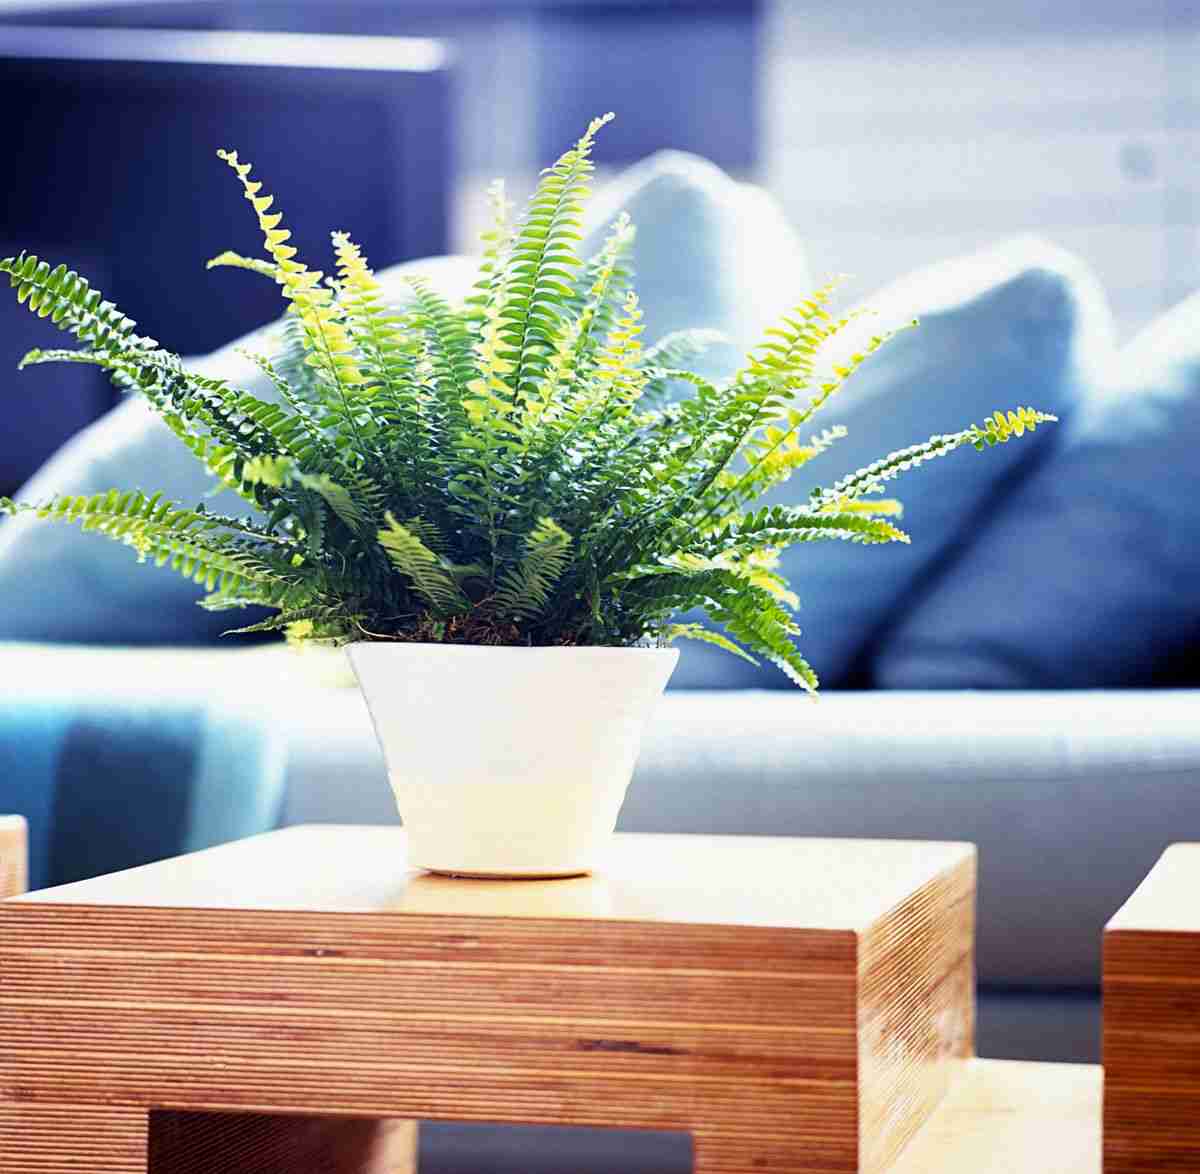 6 Plantas de invierno para decorar tu hogar 5